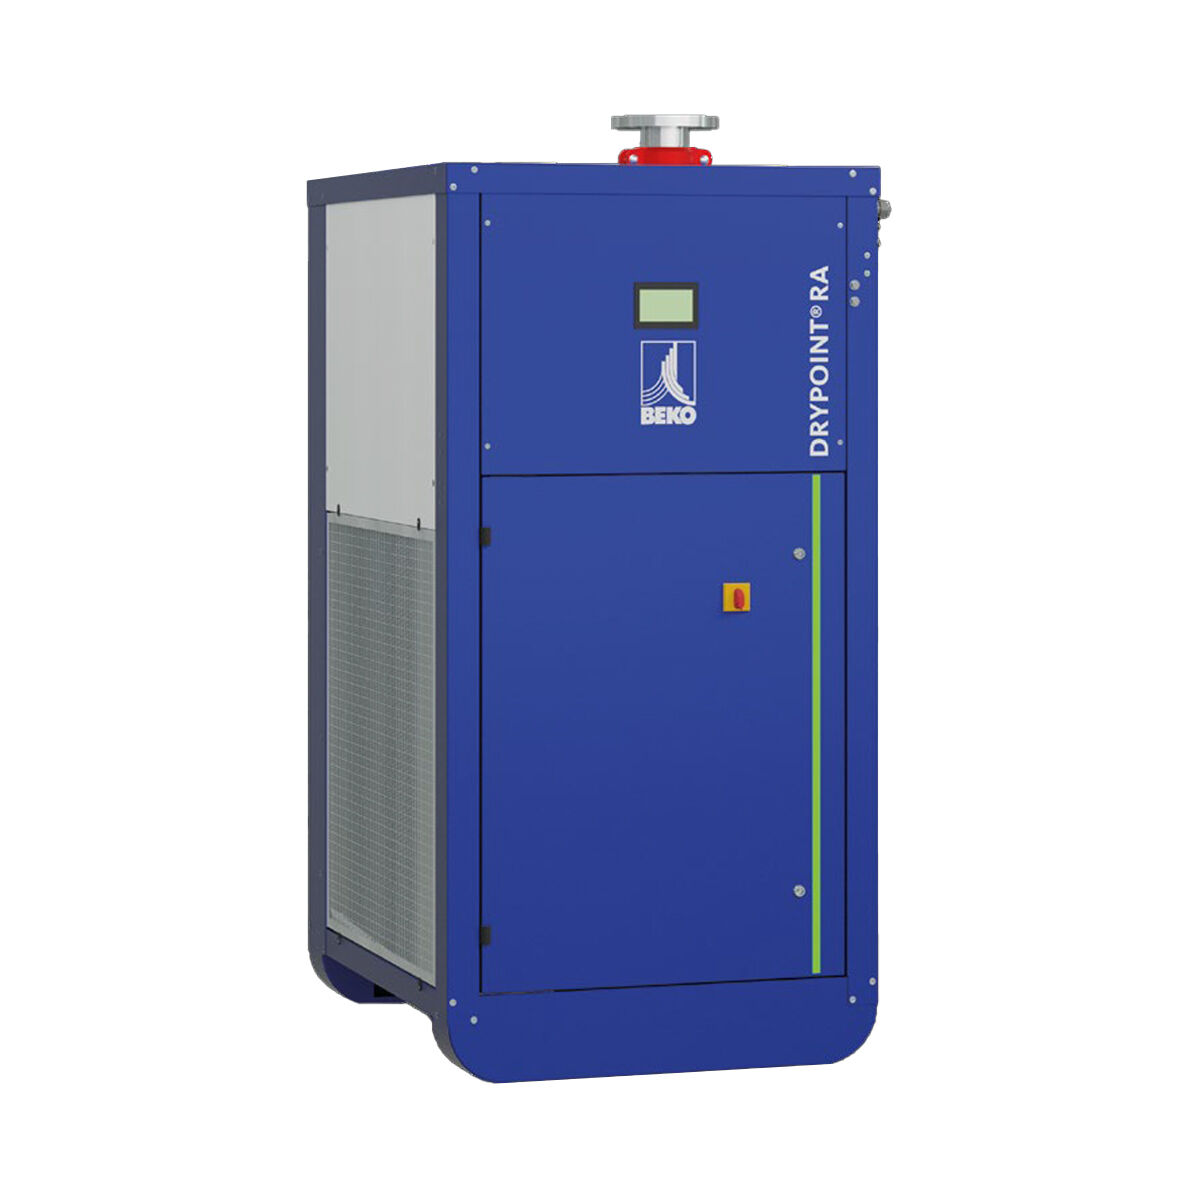 BEKO DRYPOINT RA III 370/AC essiccatore a refrigerazione ad aria compressa con Bekomat, raffreddato ad aria